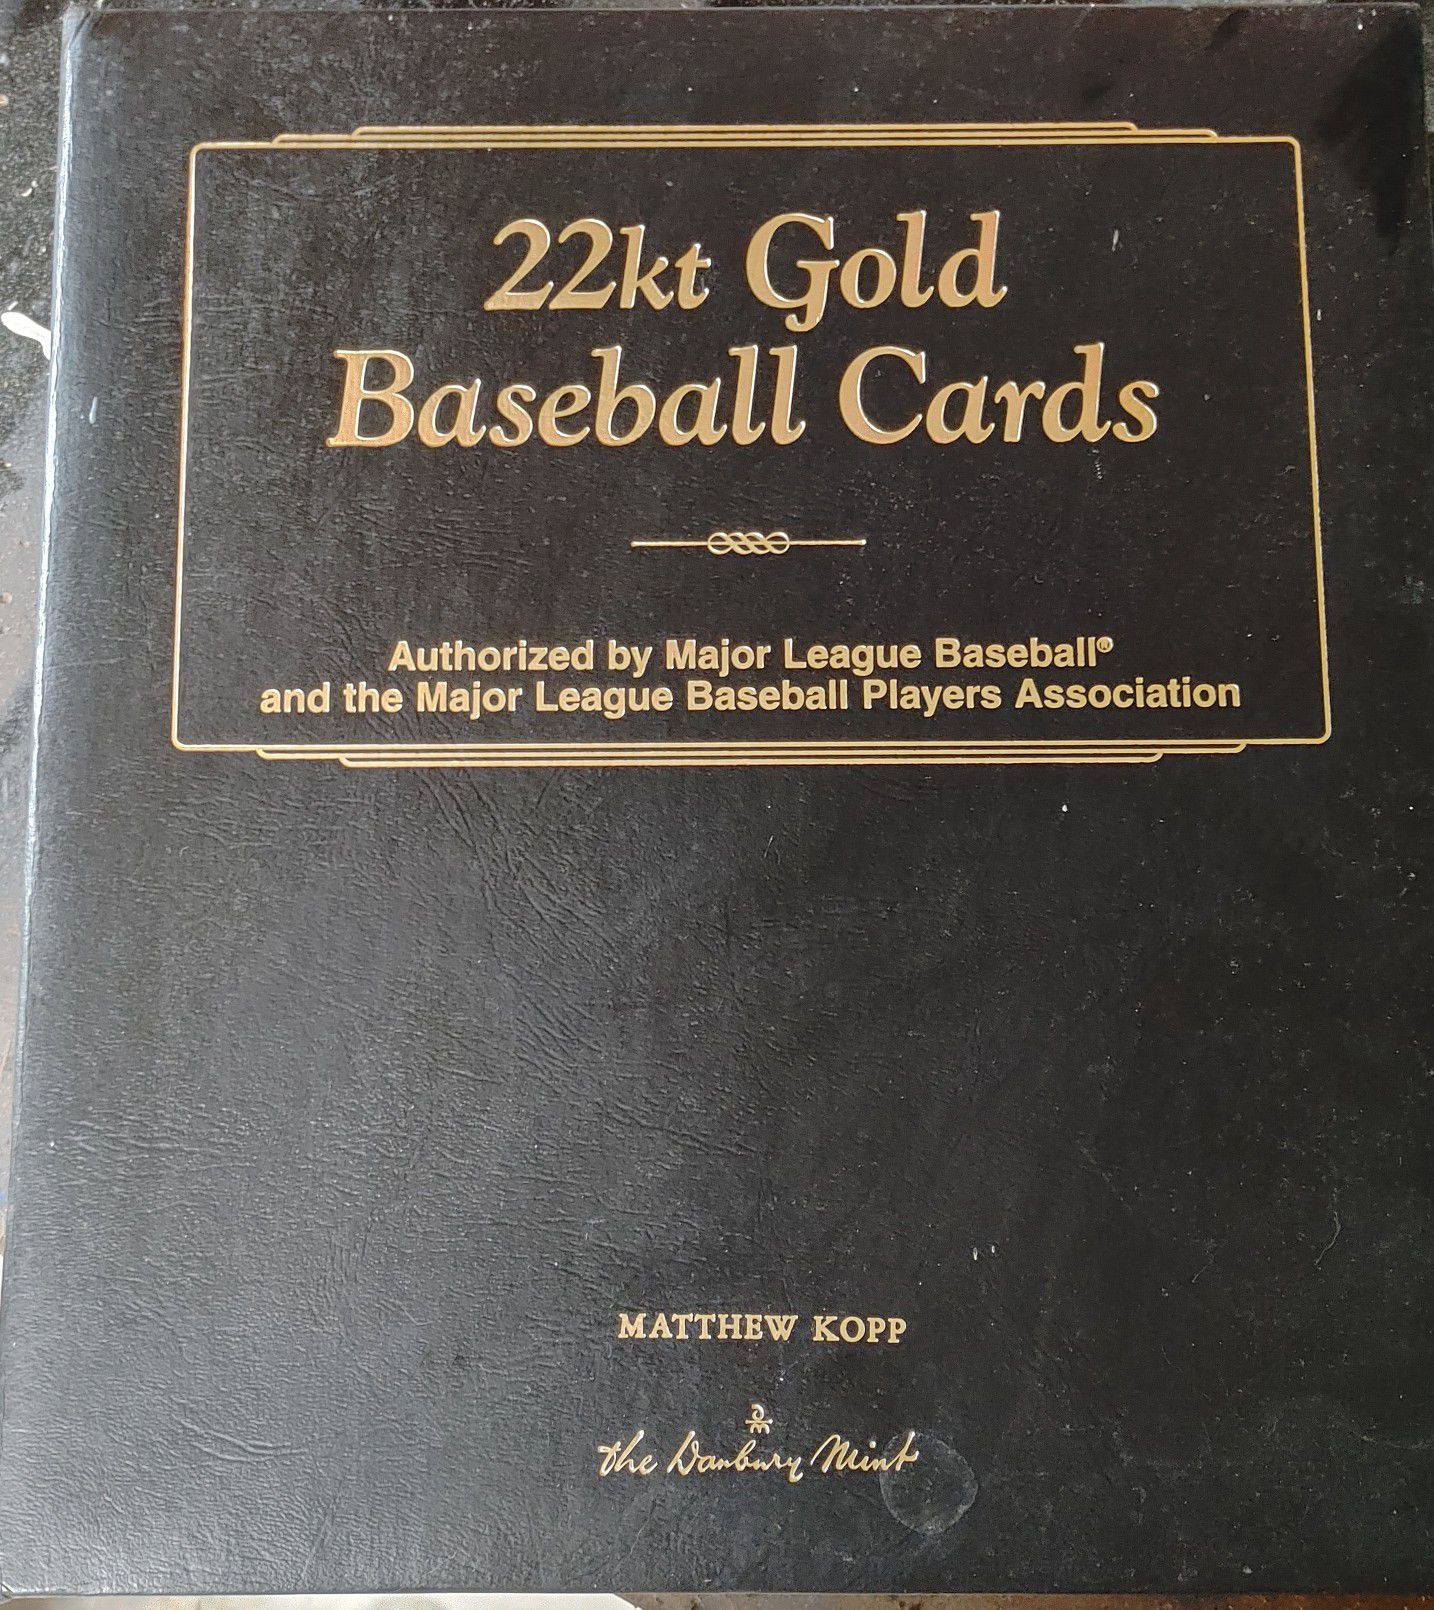 Danbury mint gold baseball cards